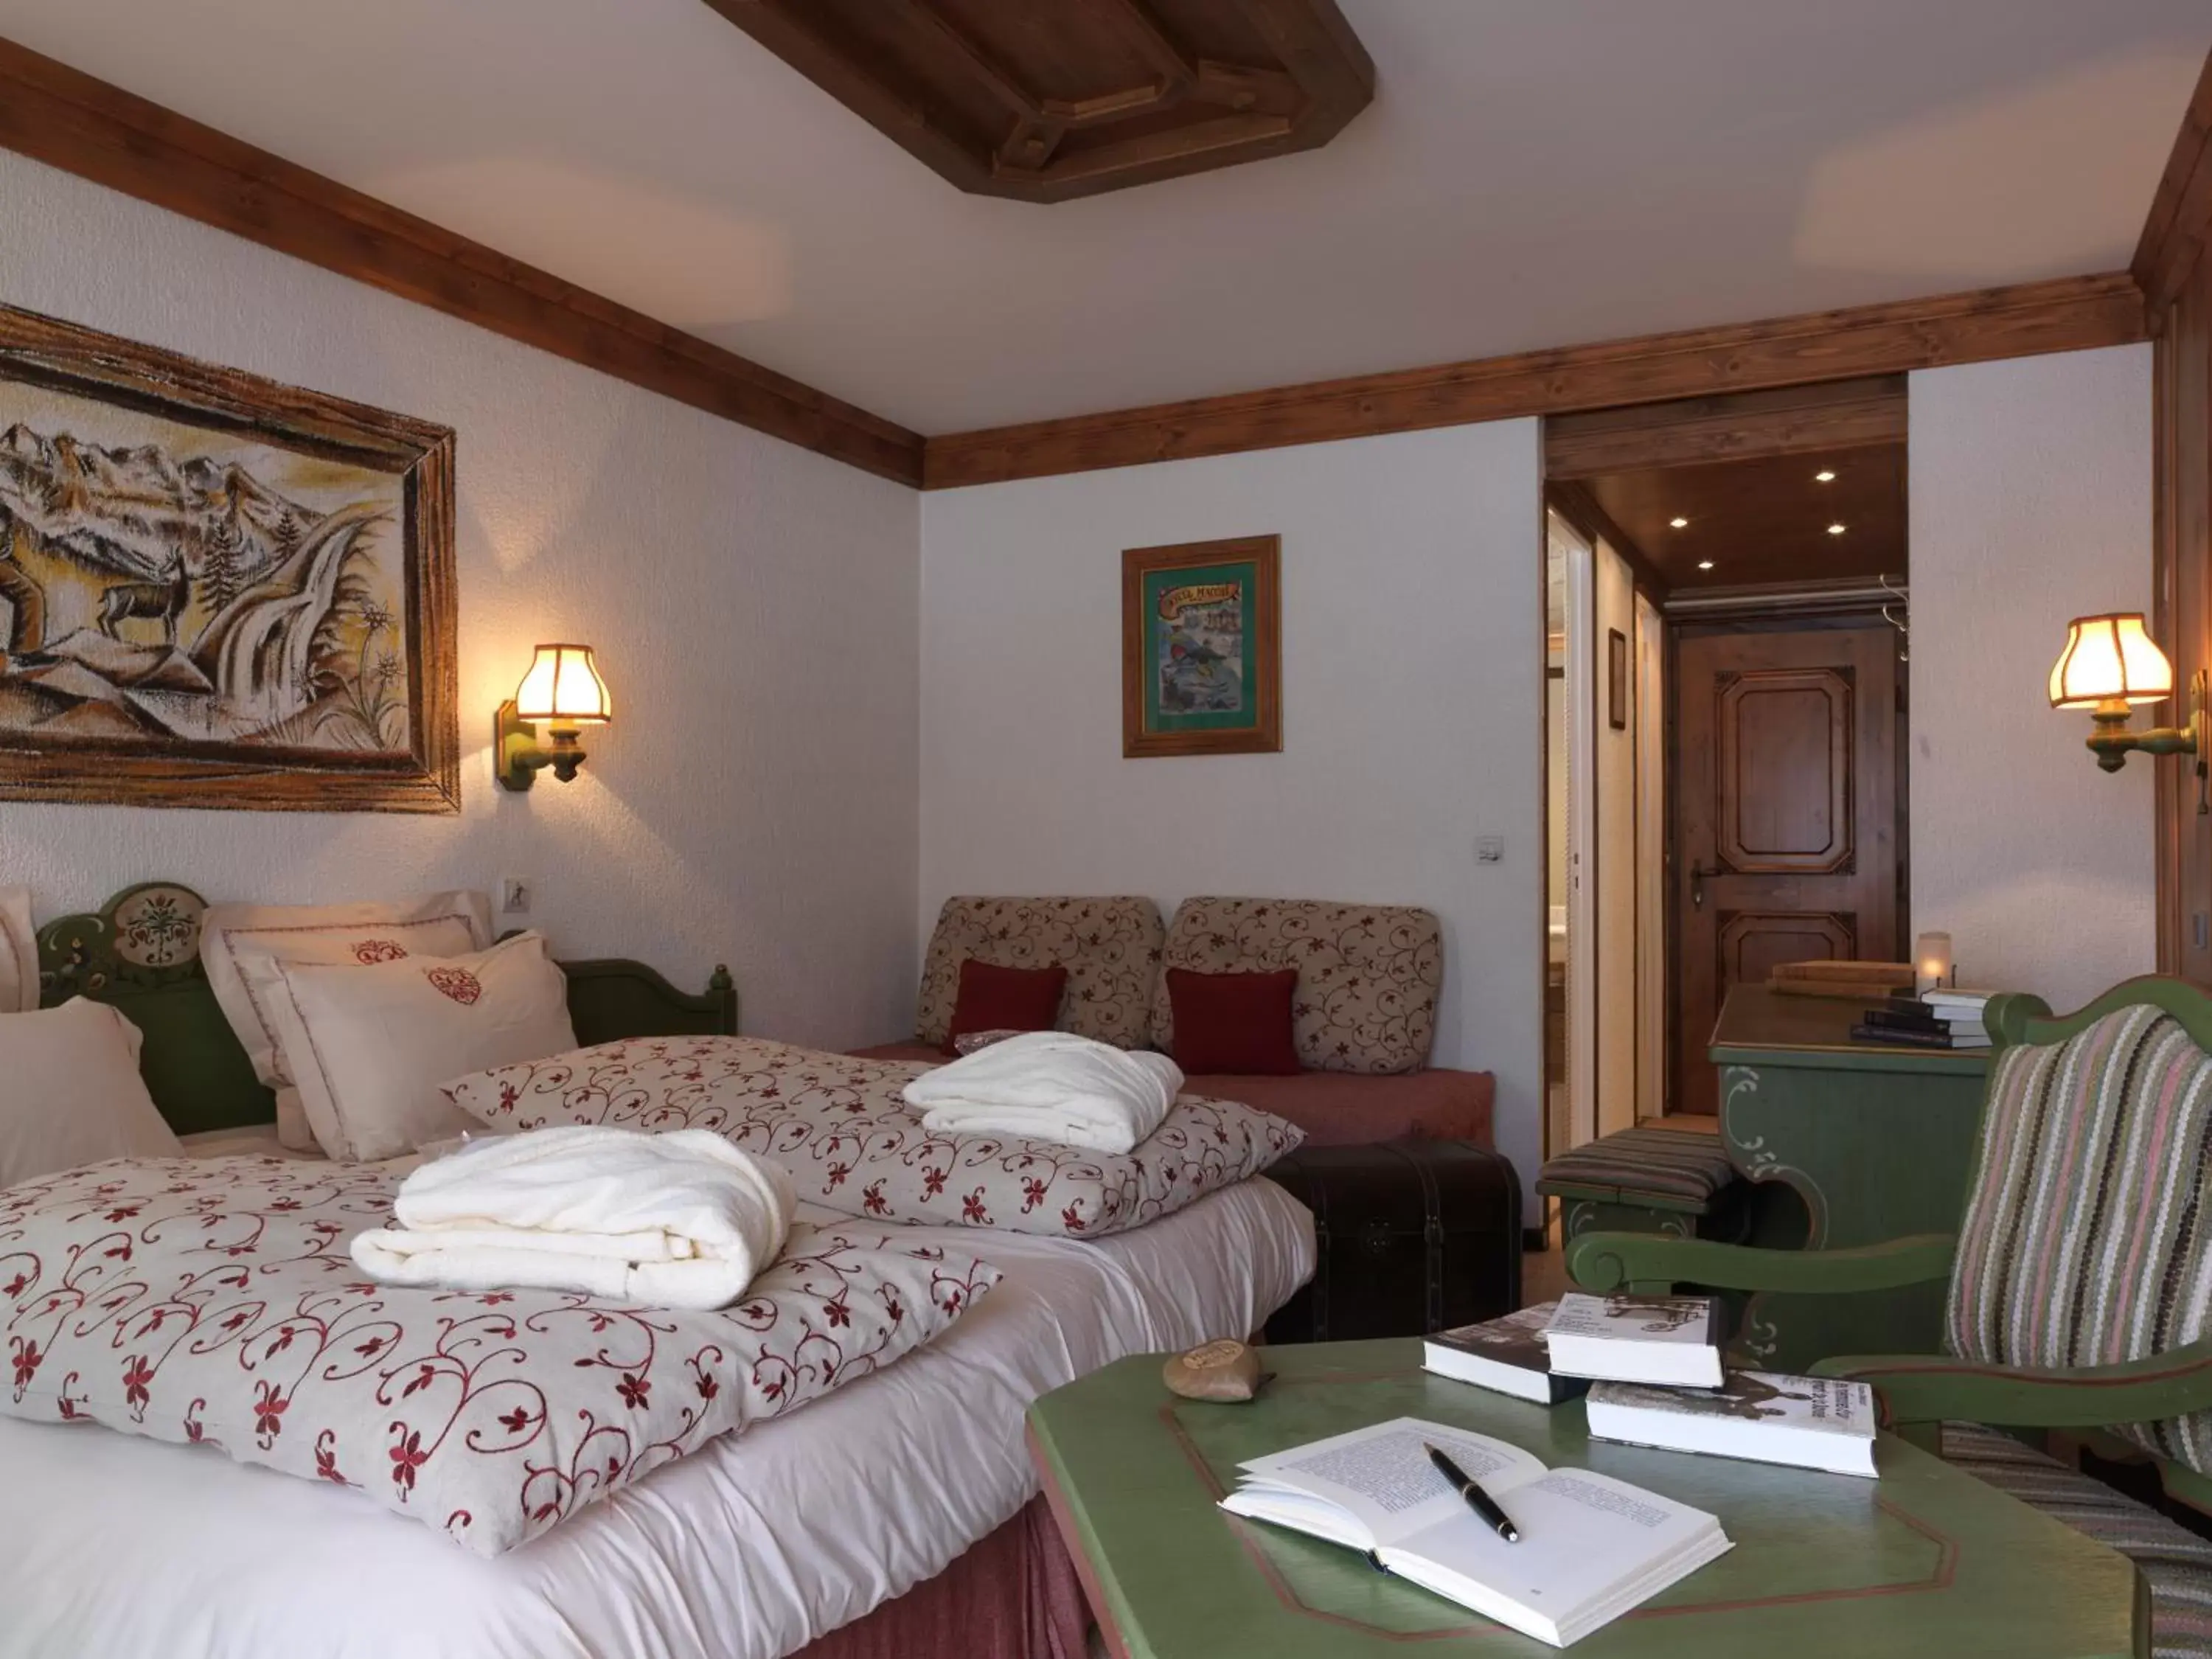 Bed, Room Photo in Hôtel Macchi Restaurant & Spa